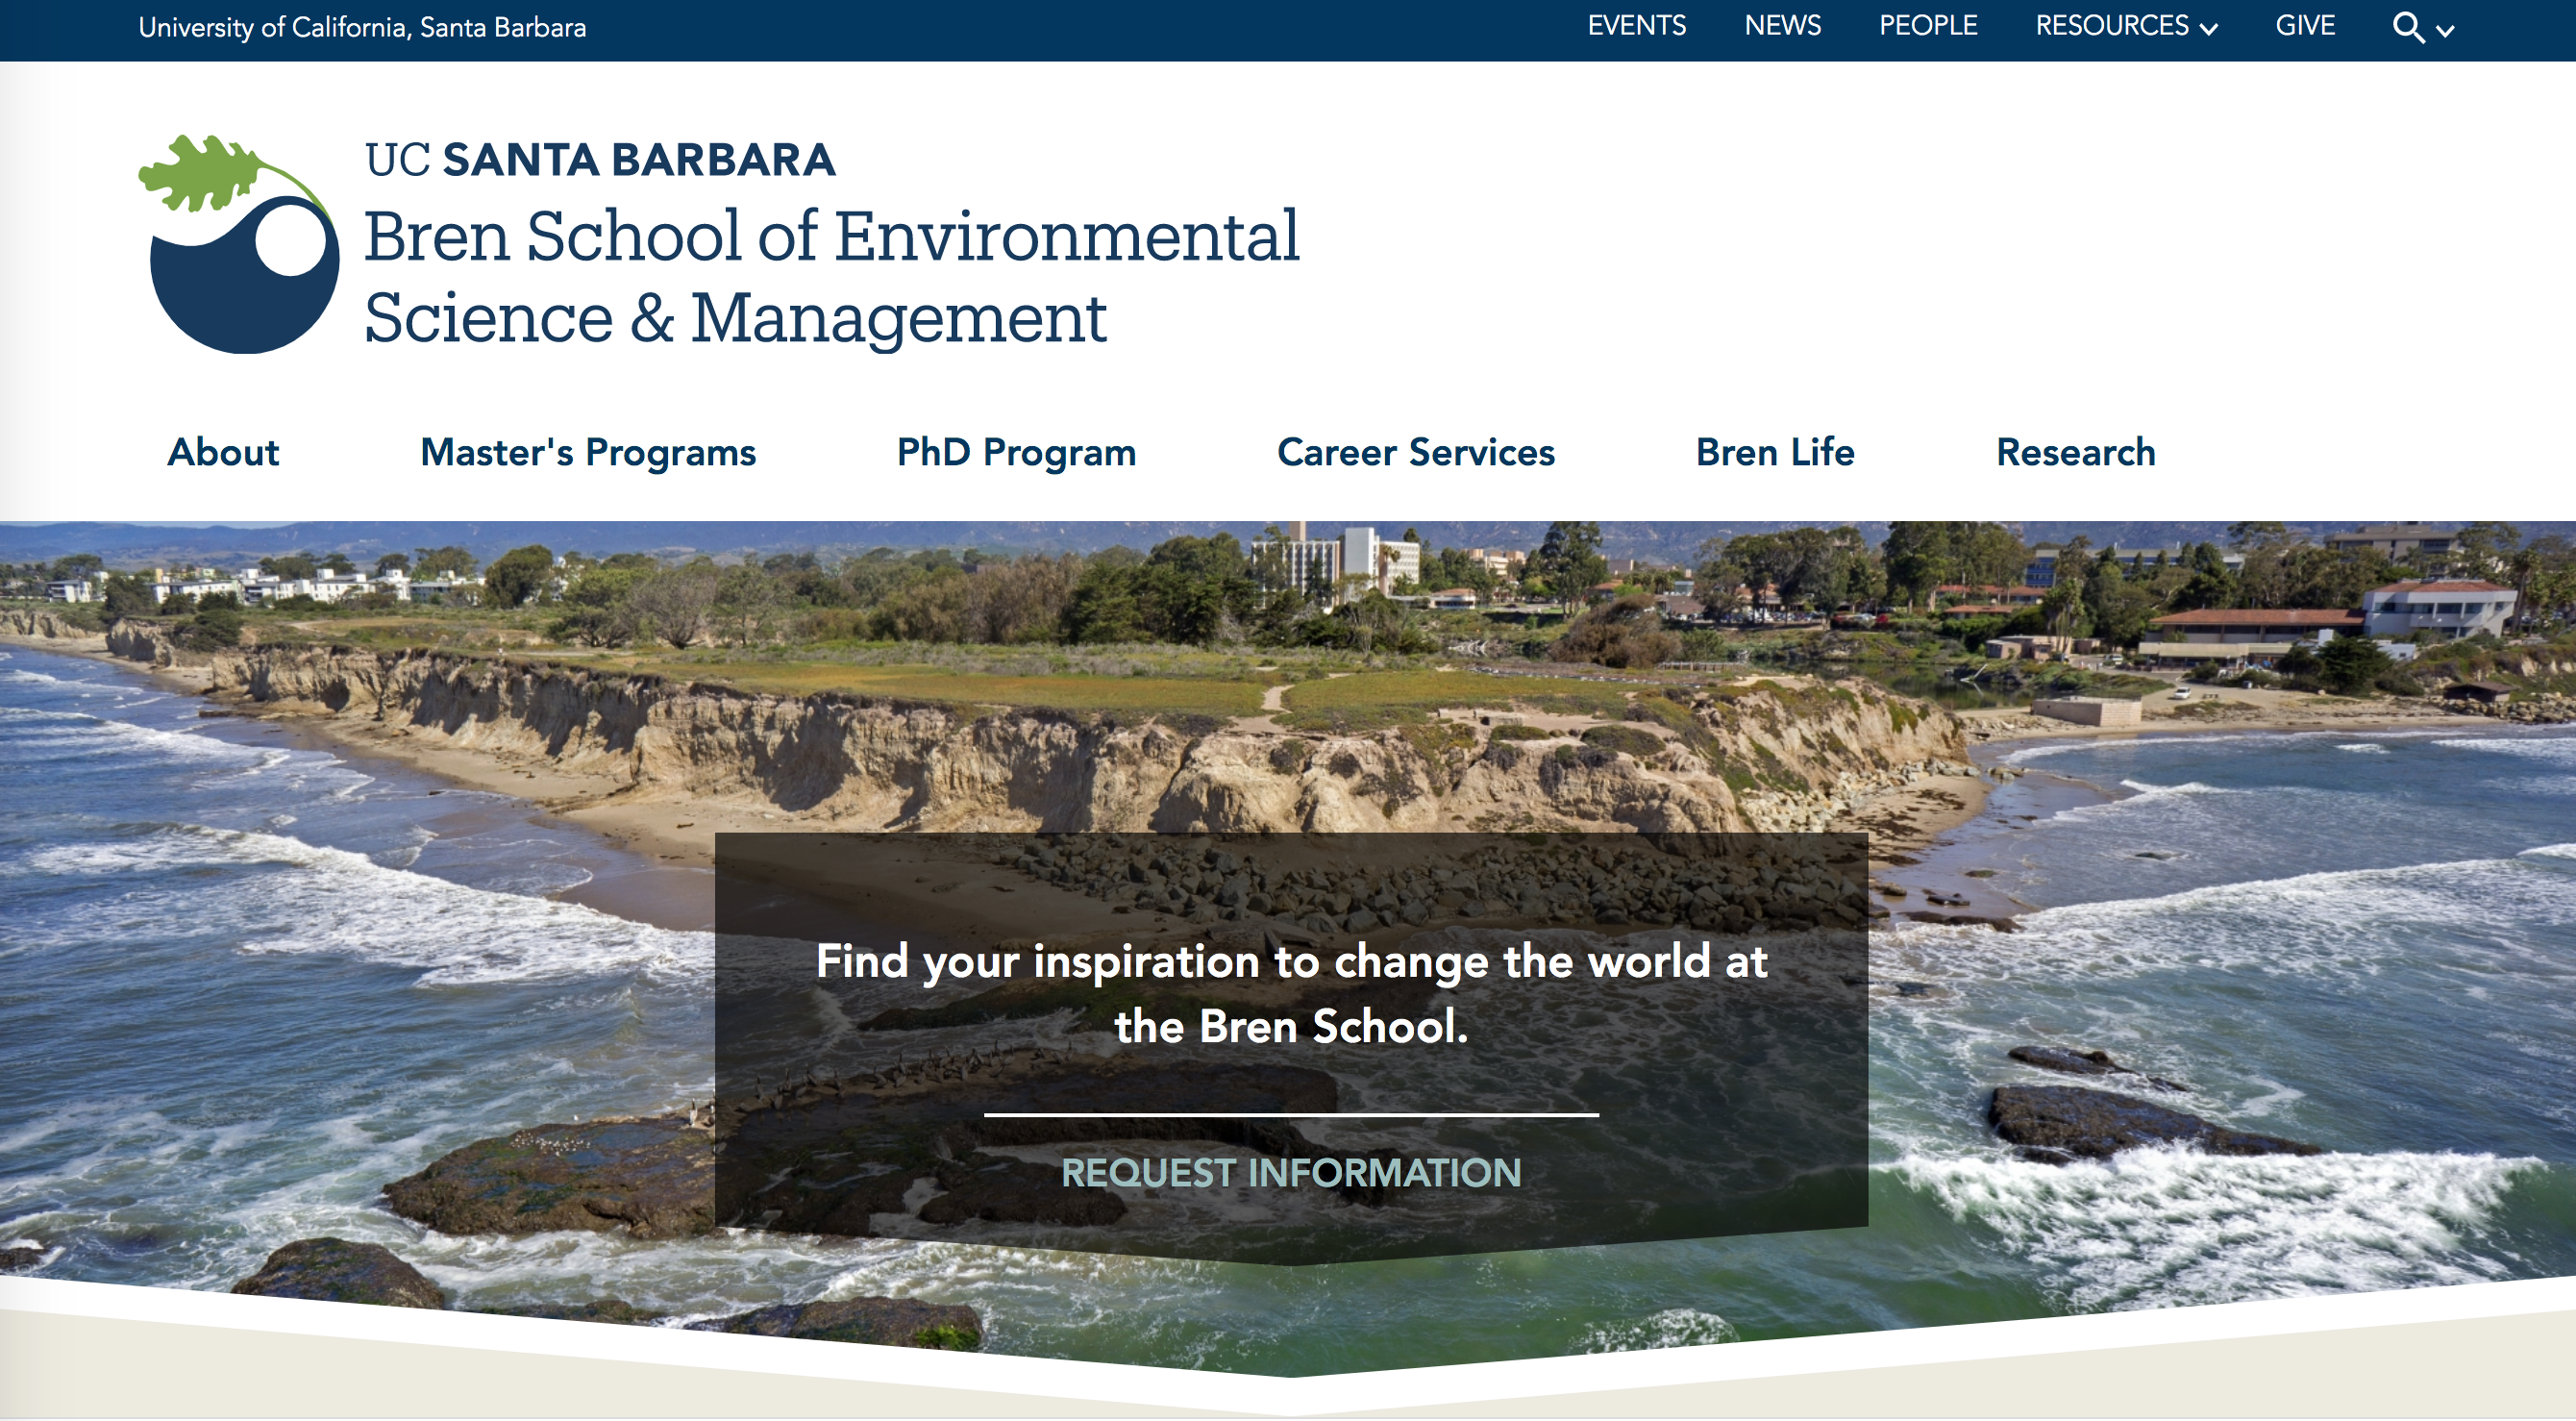 Bren School home page image